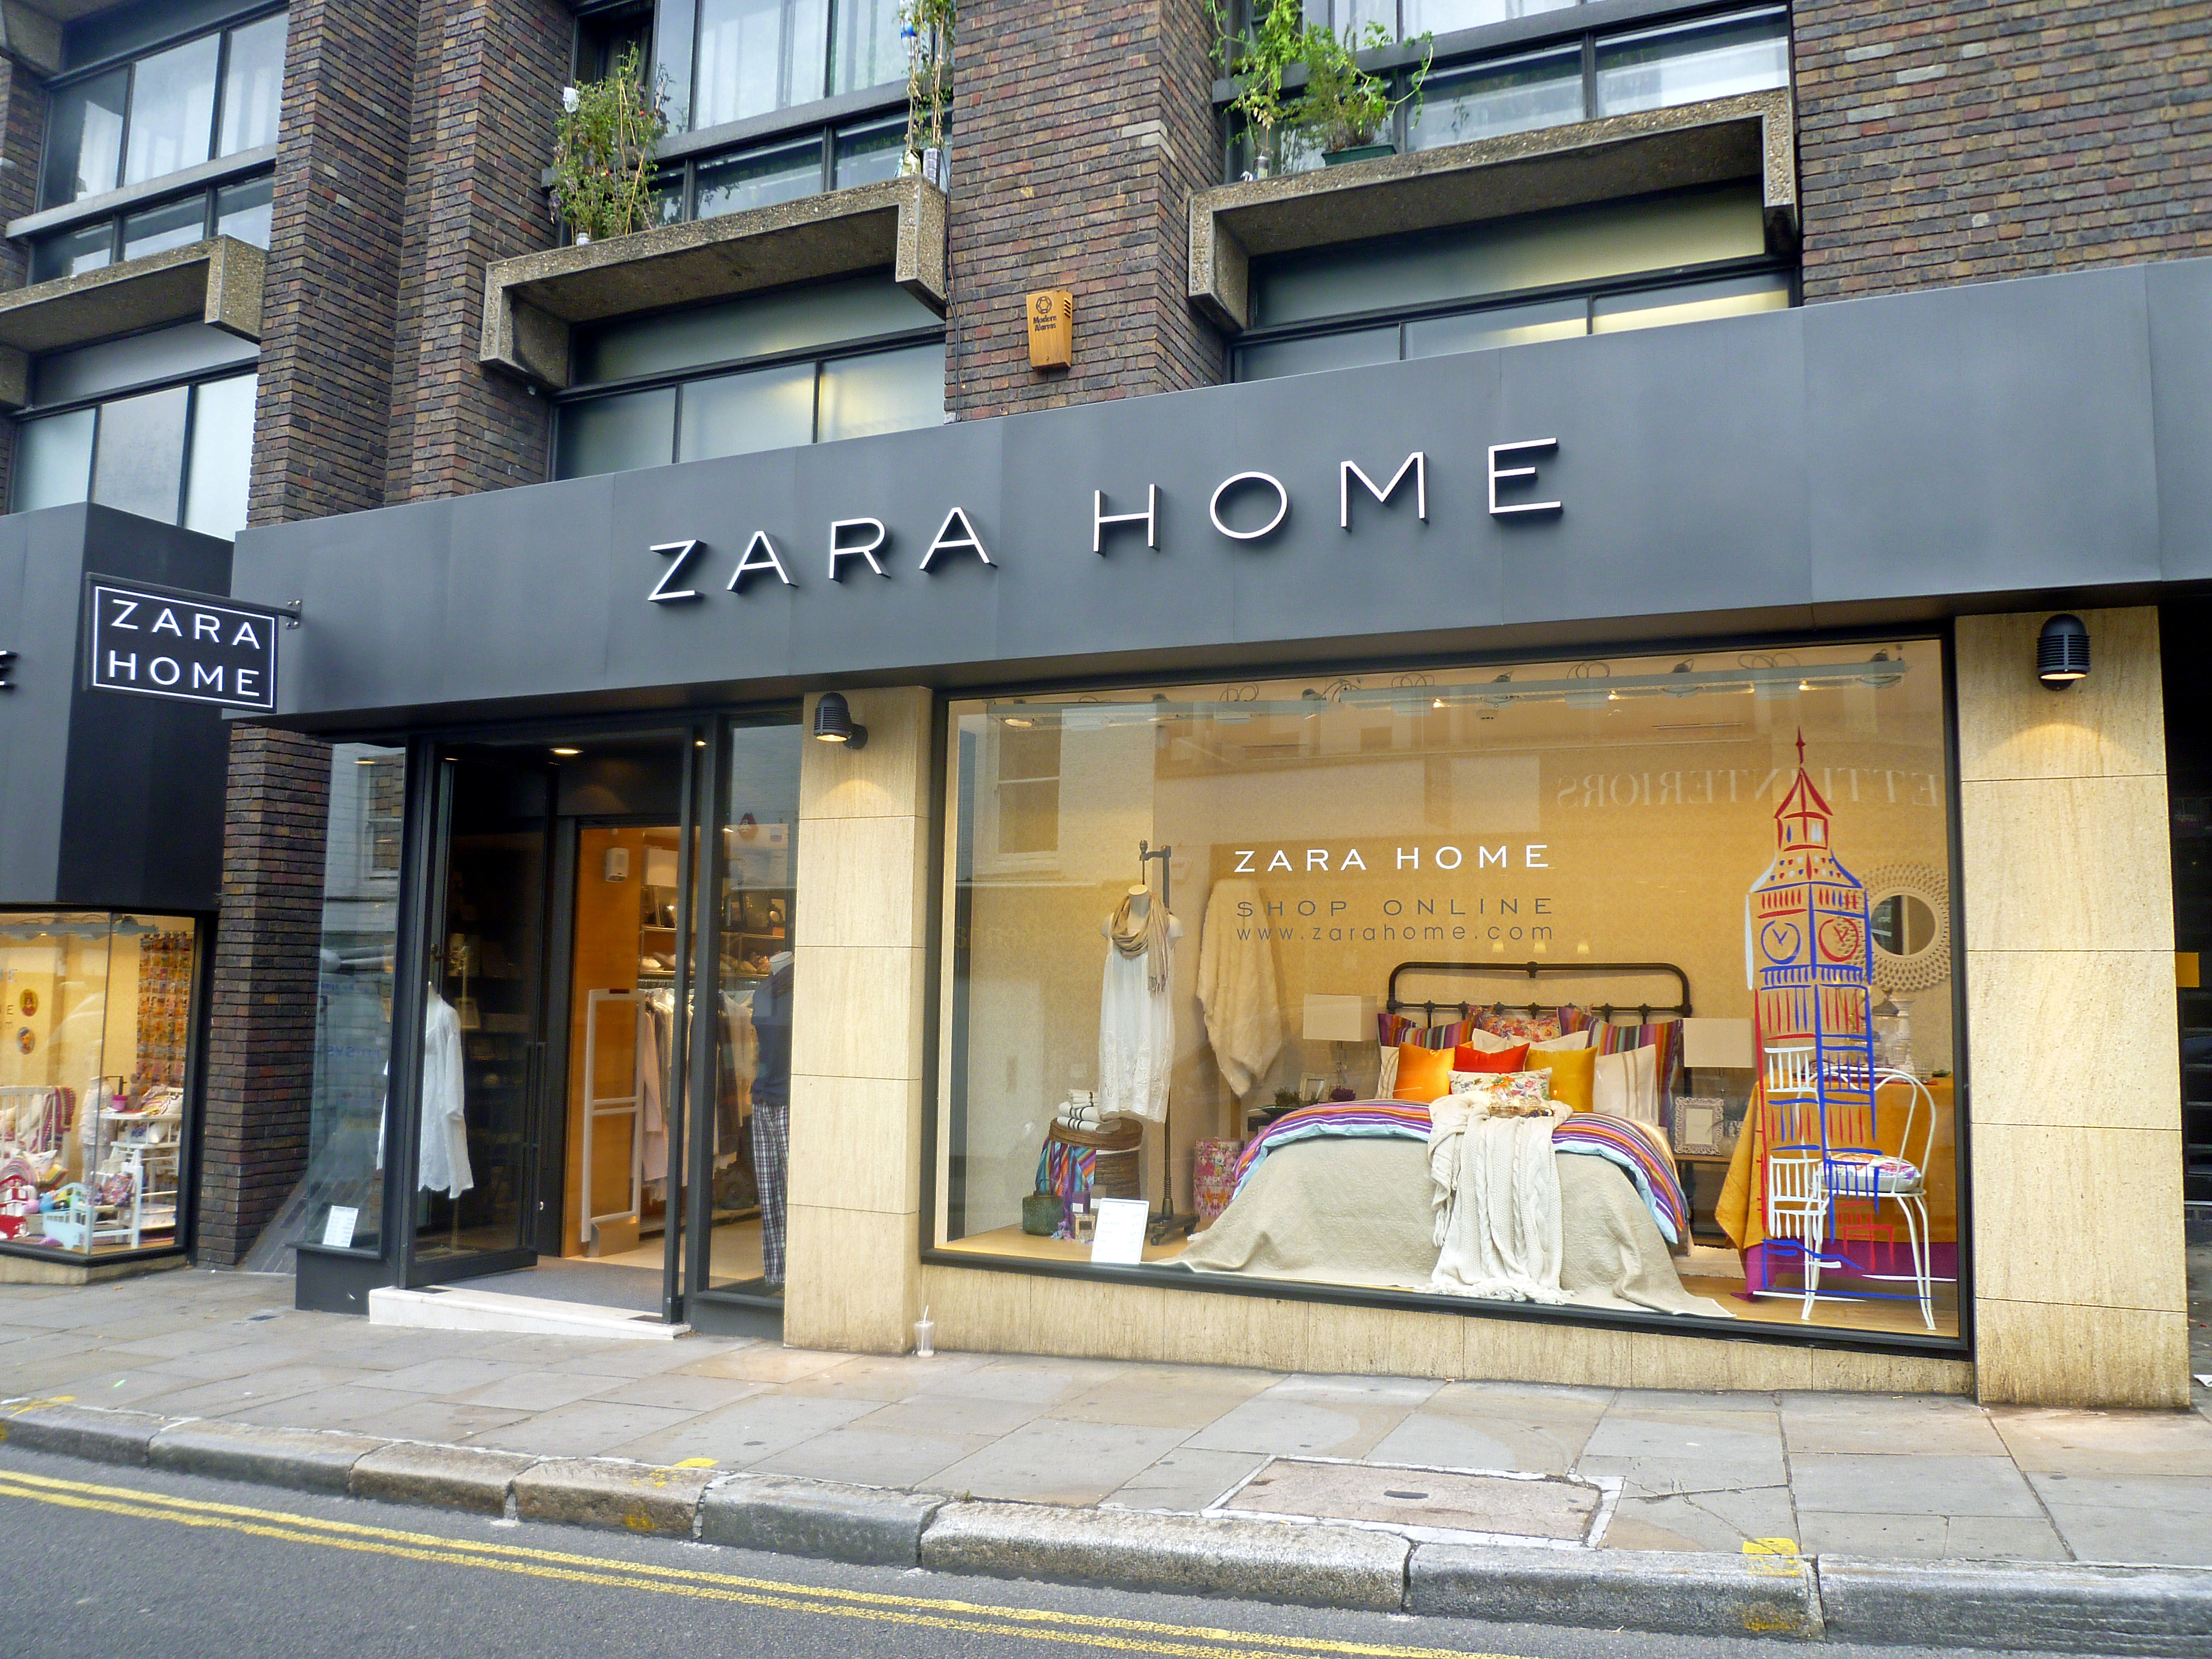 Zara-Home-image-by-Homegirl-London1